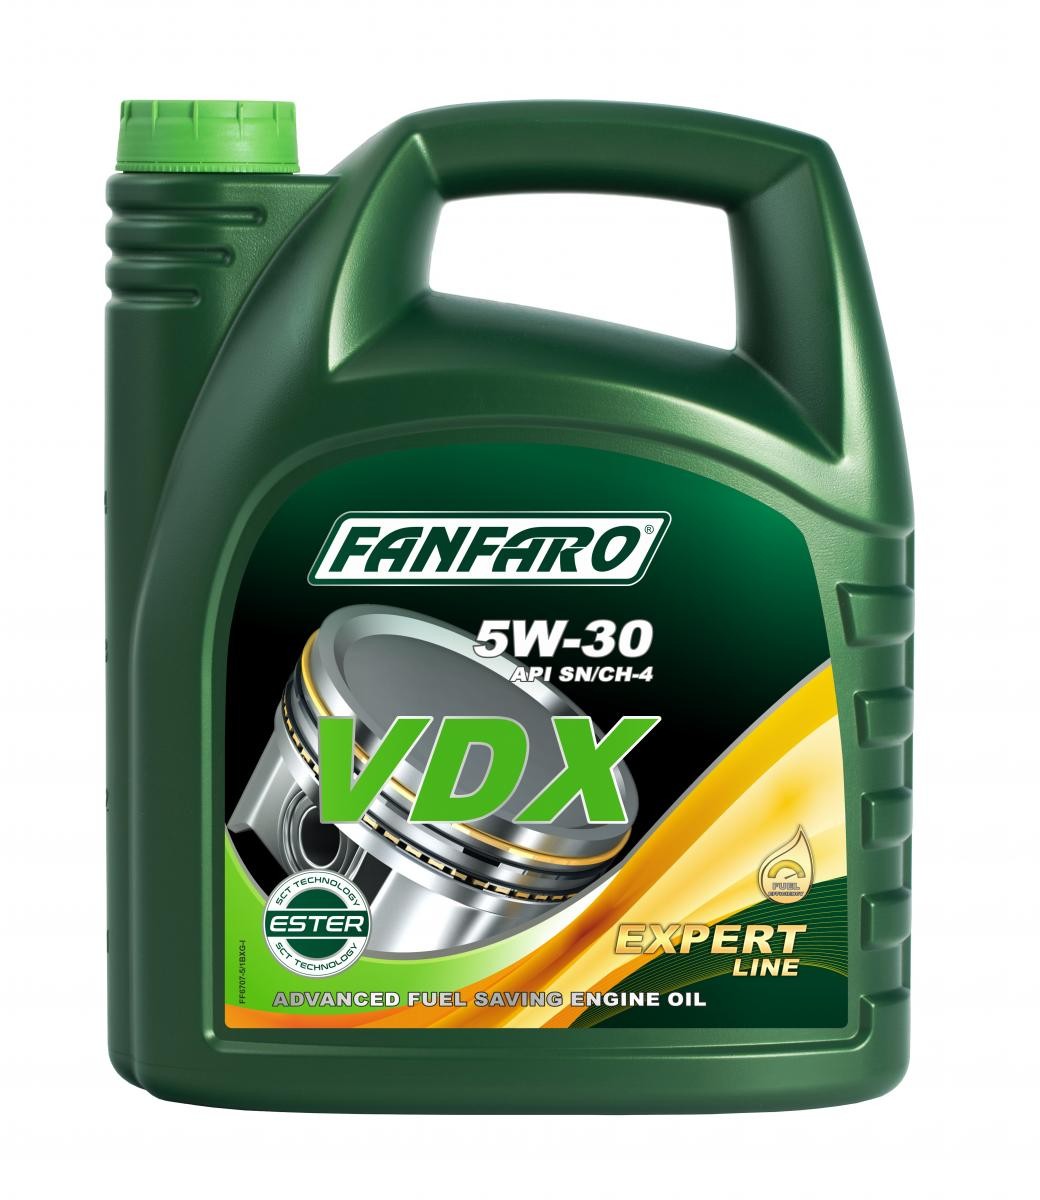 Engine oil FANFARO 5W-30, 5l, Synthetic Oil longlife FF6707-5